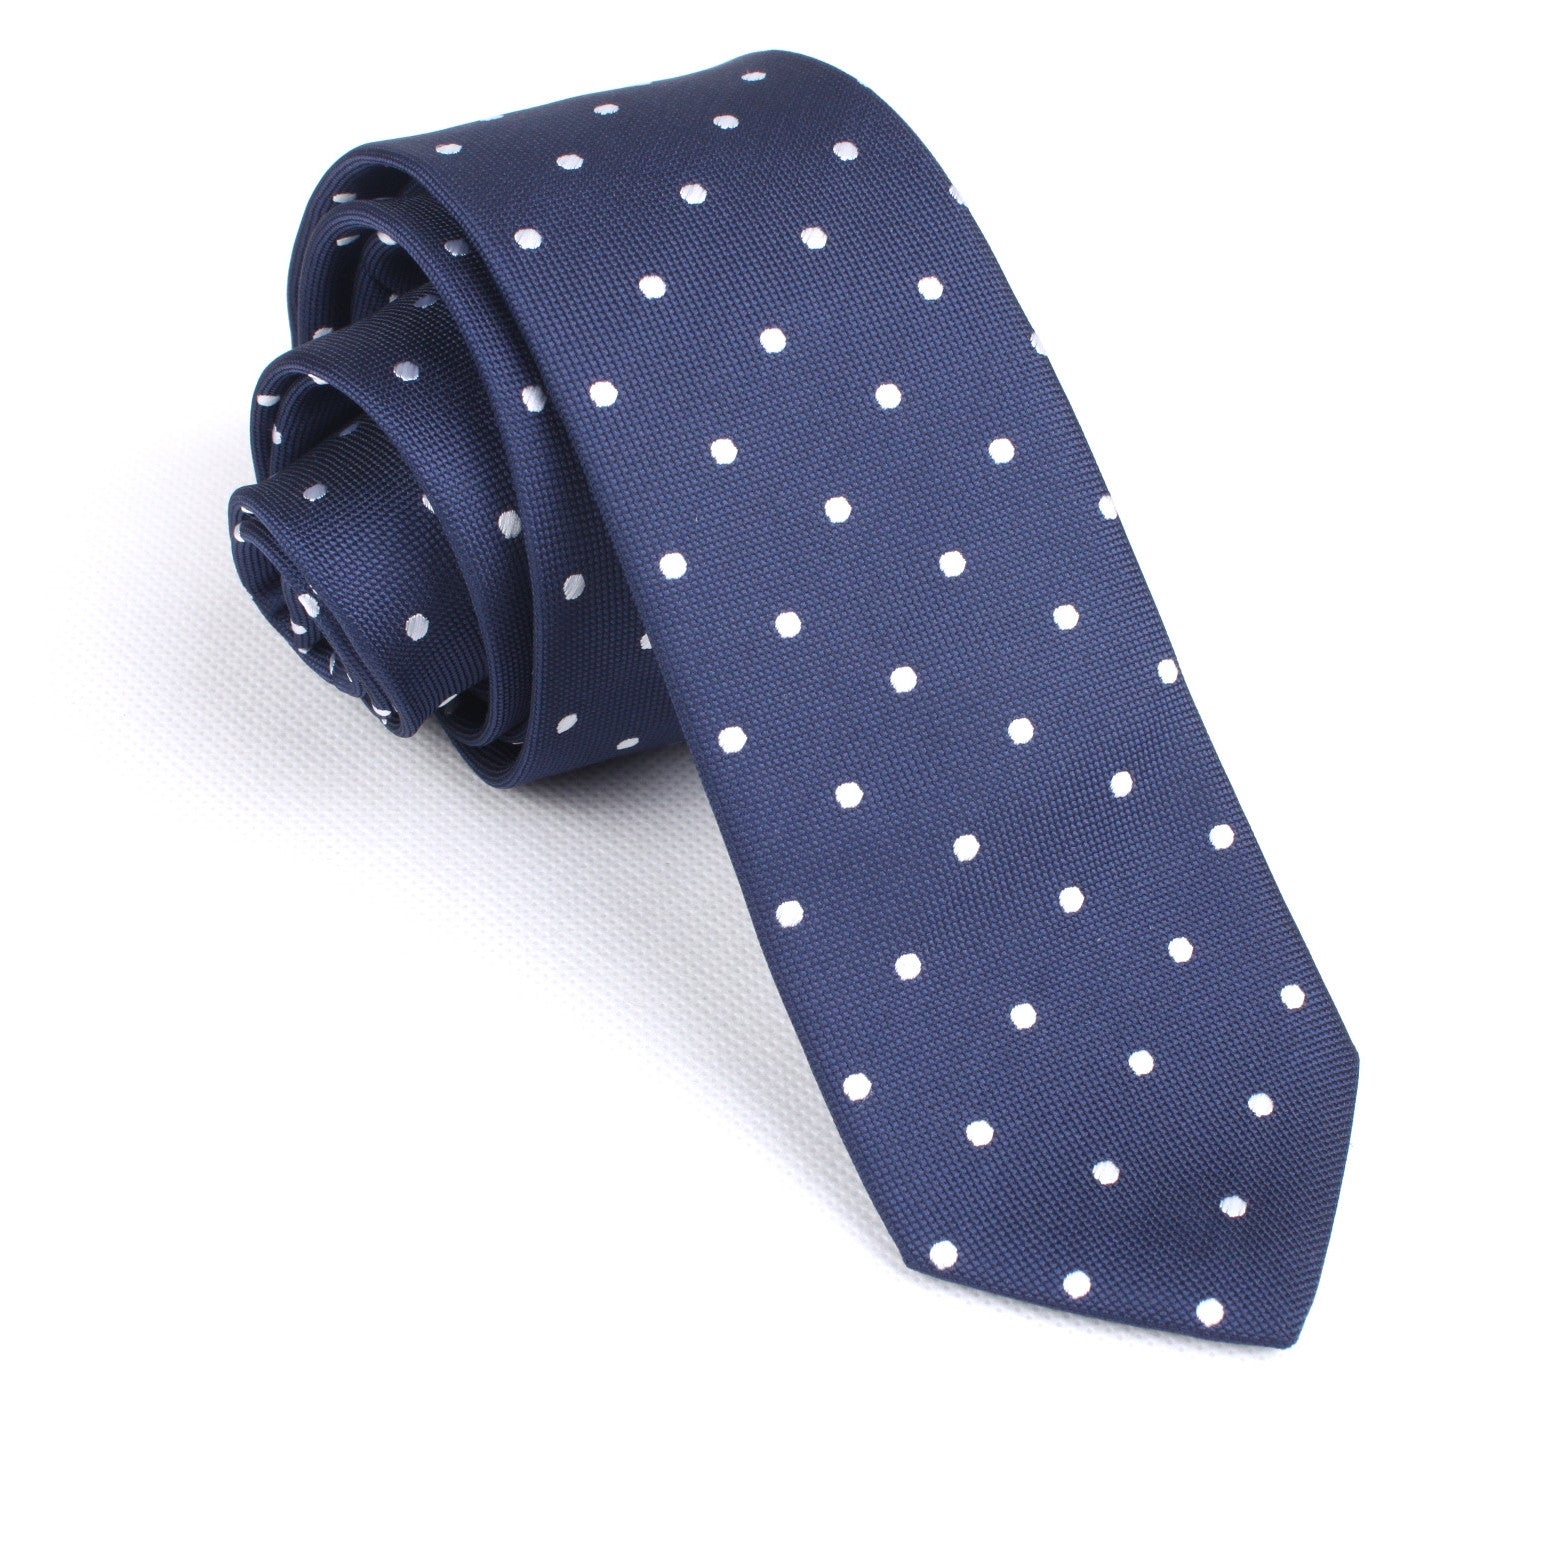 The OTAA Navy Blue Skinny Tie